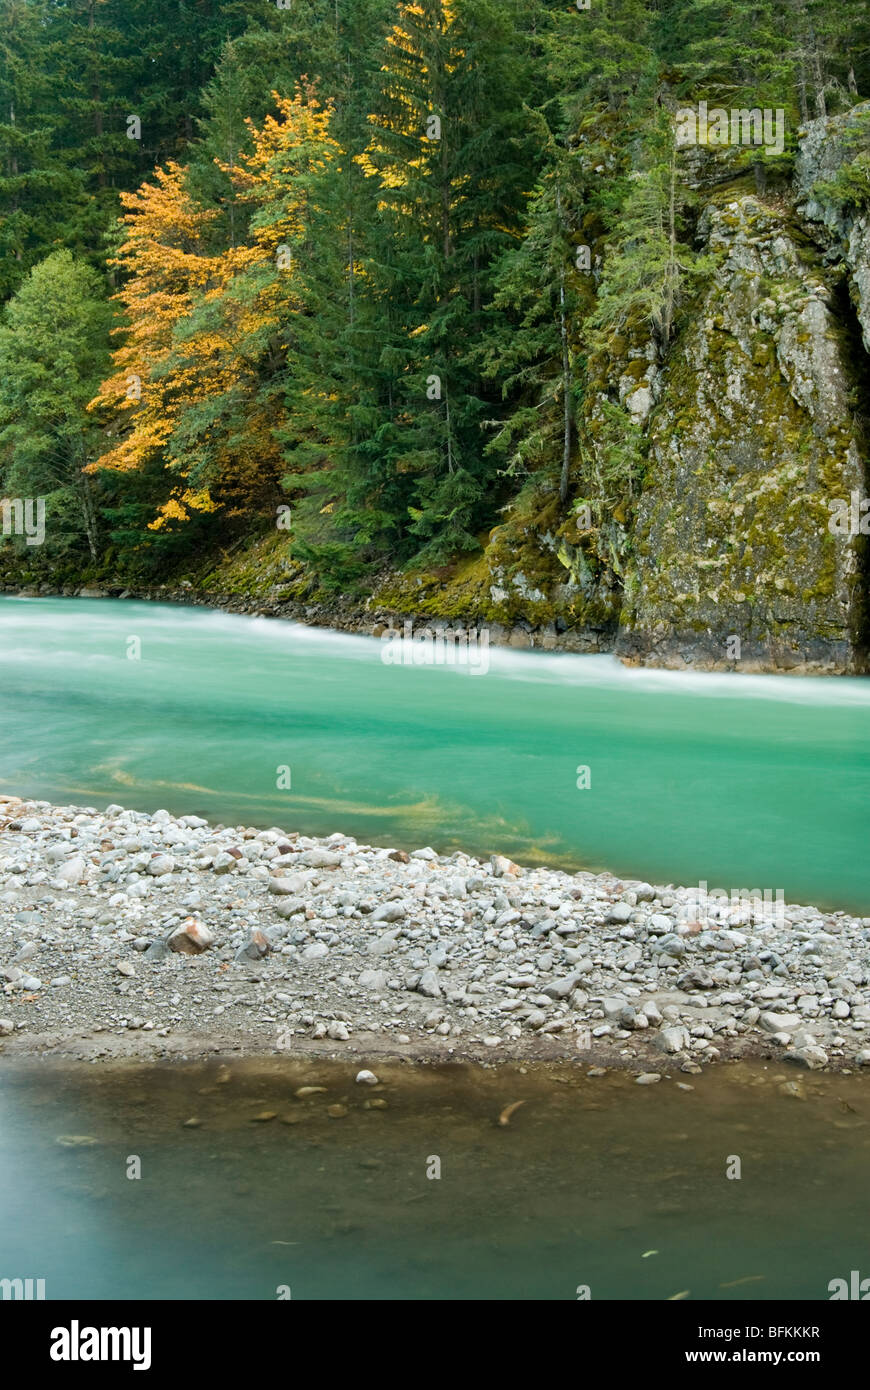 The Skagit River in Washington's North Cascades. Stock Photo